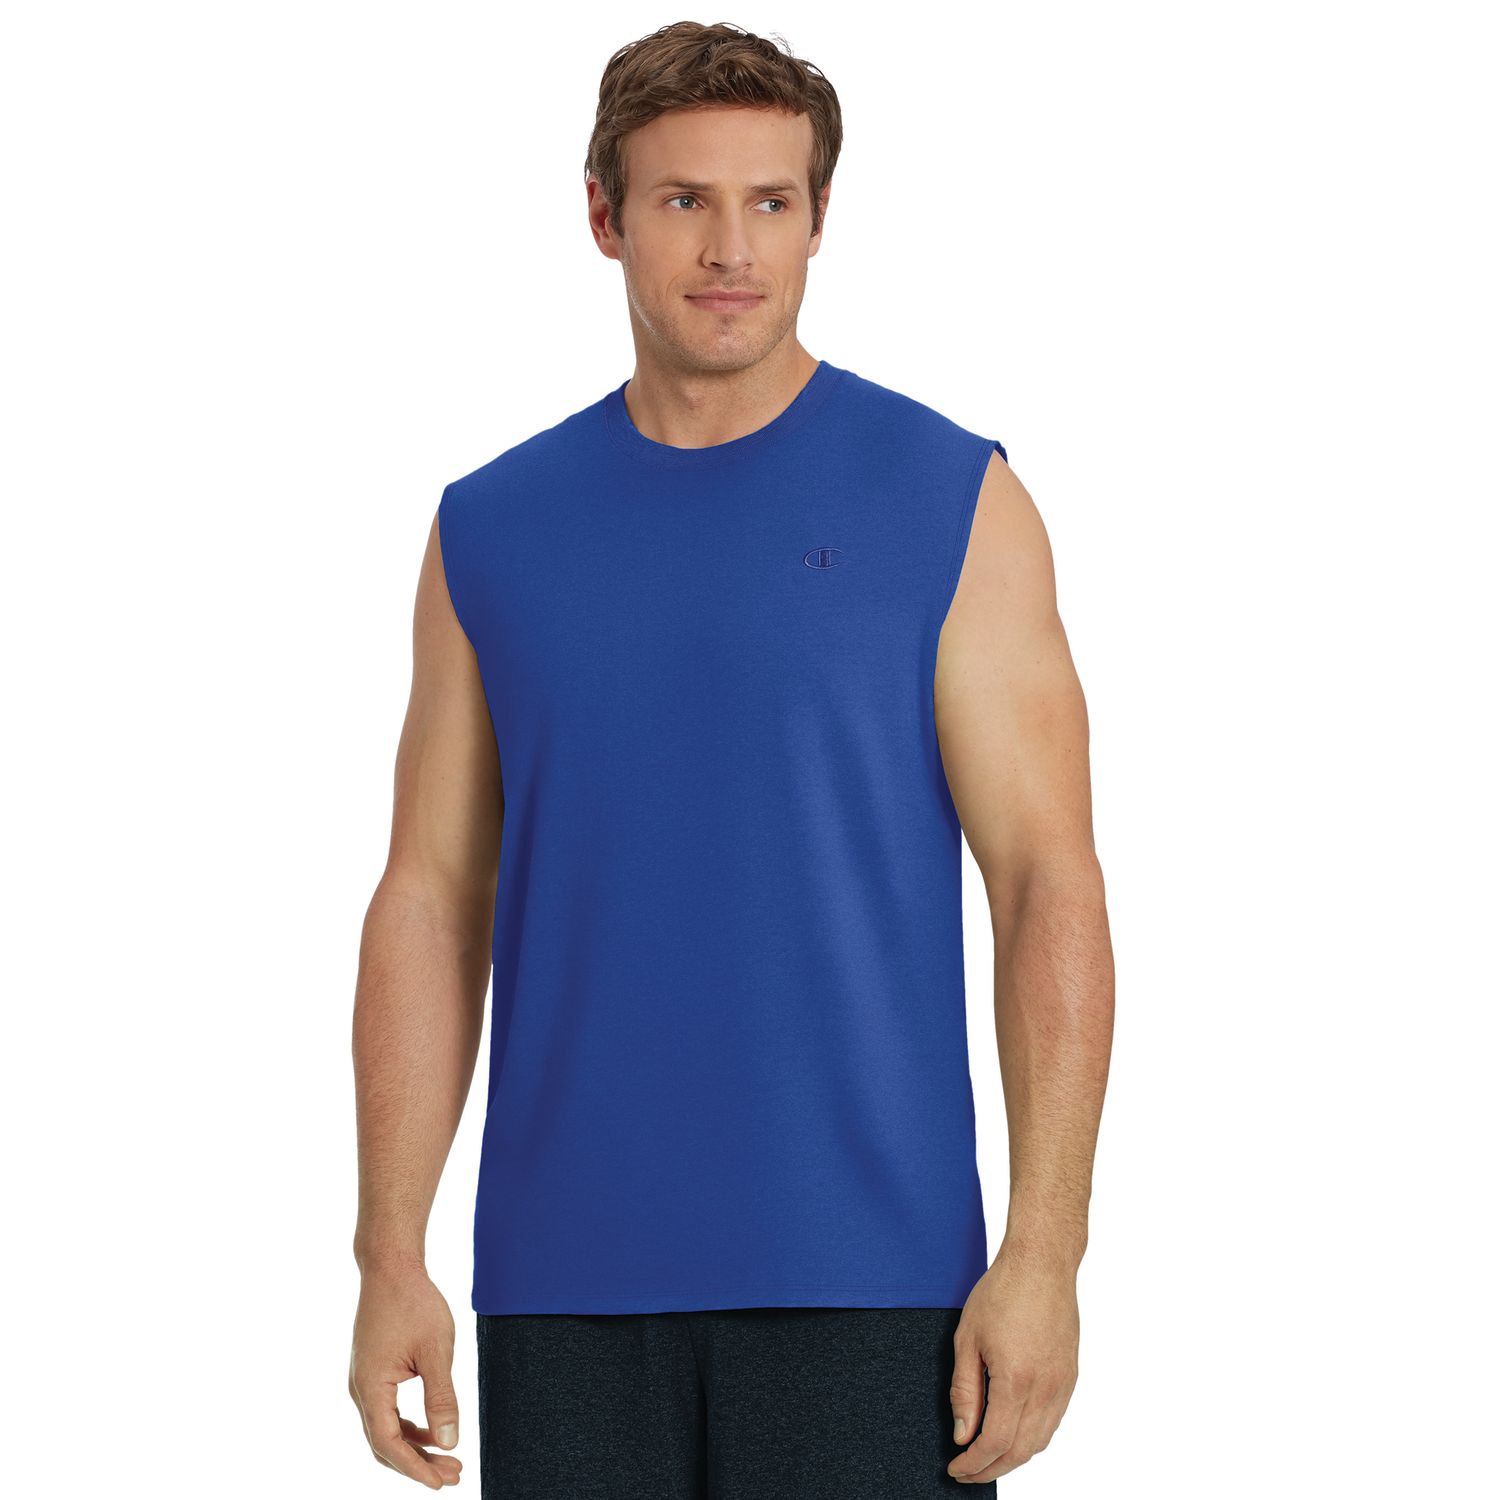 men's champion sleeveless shirts